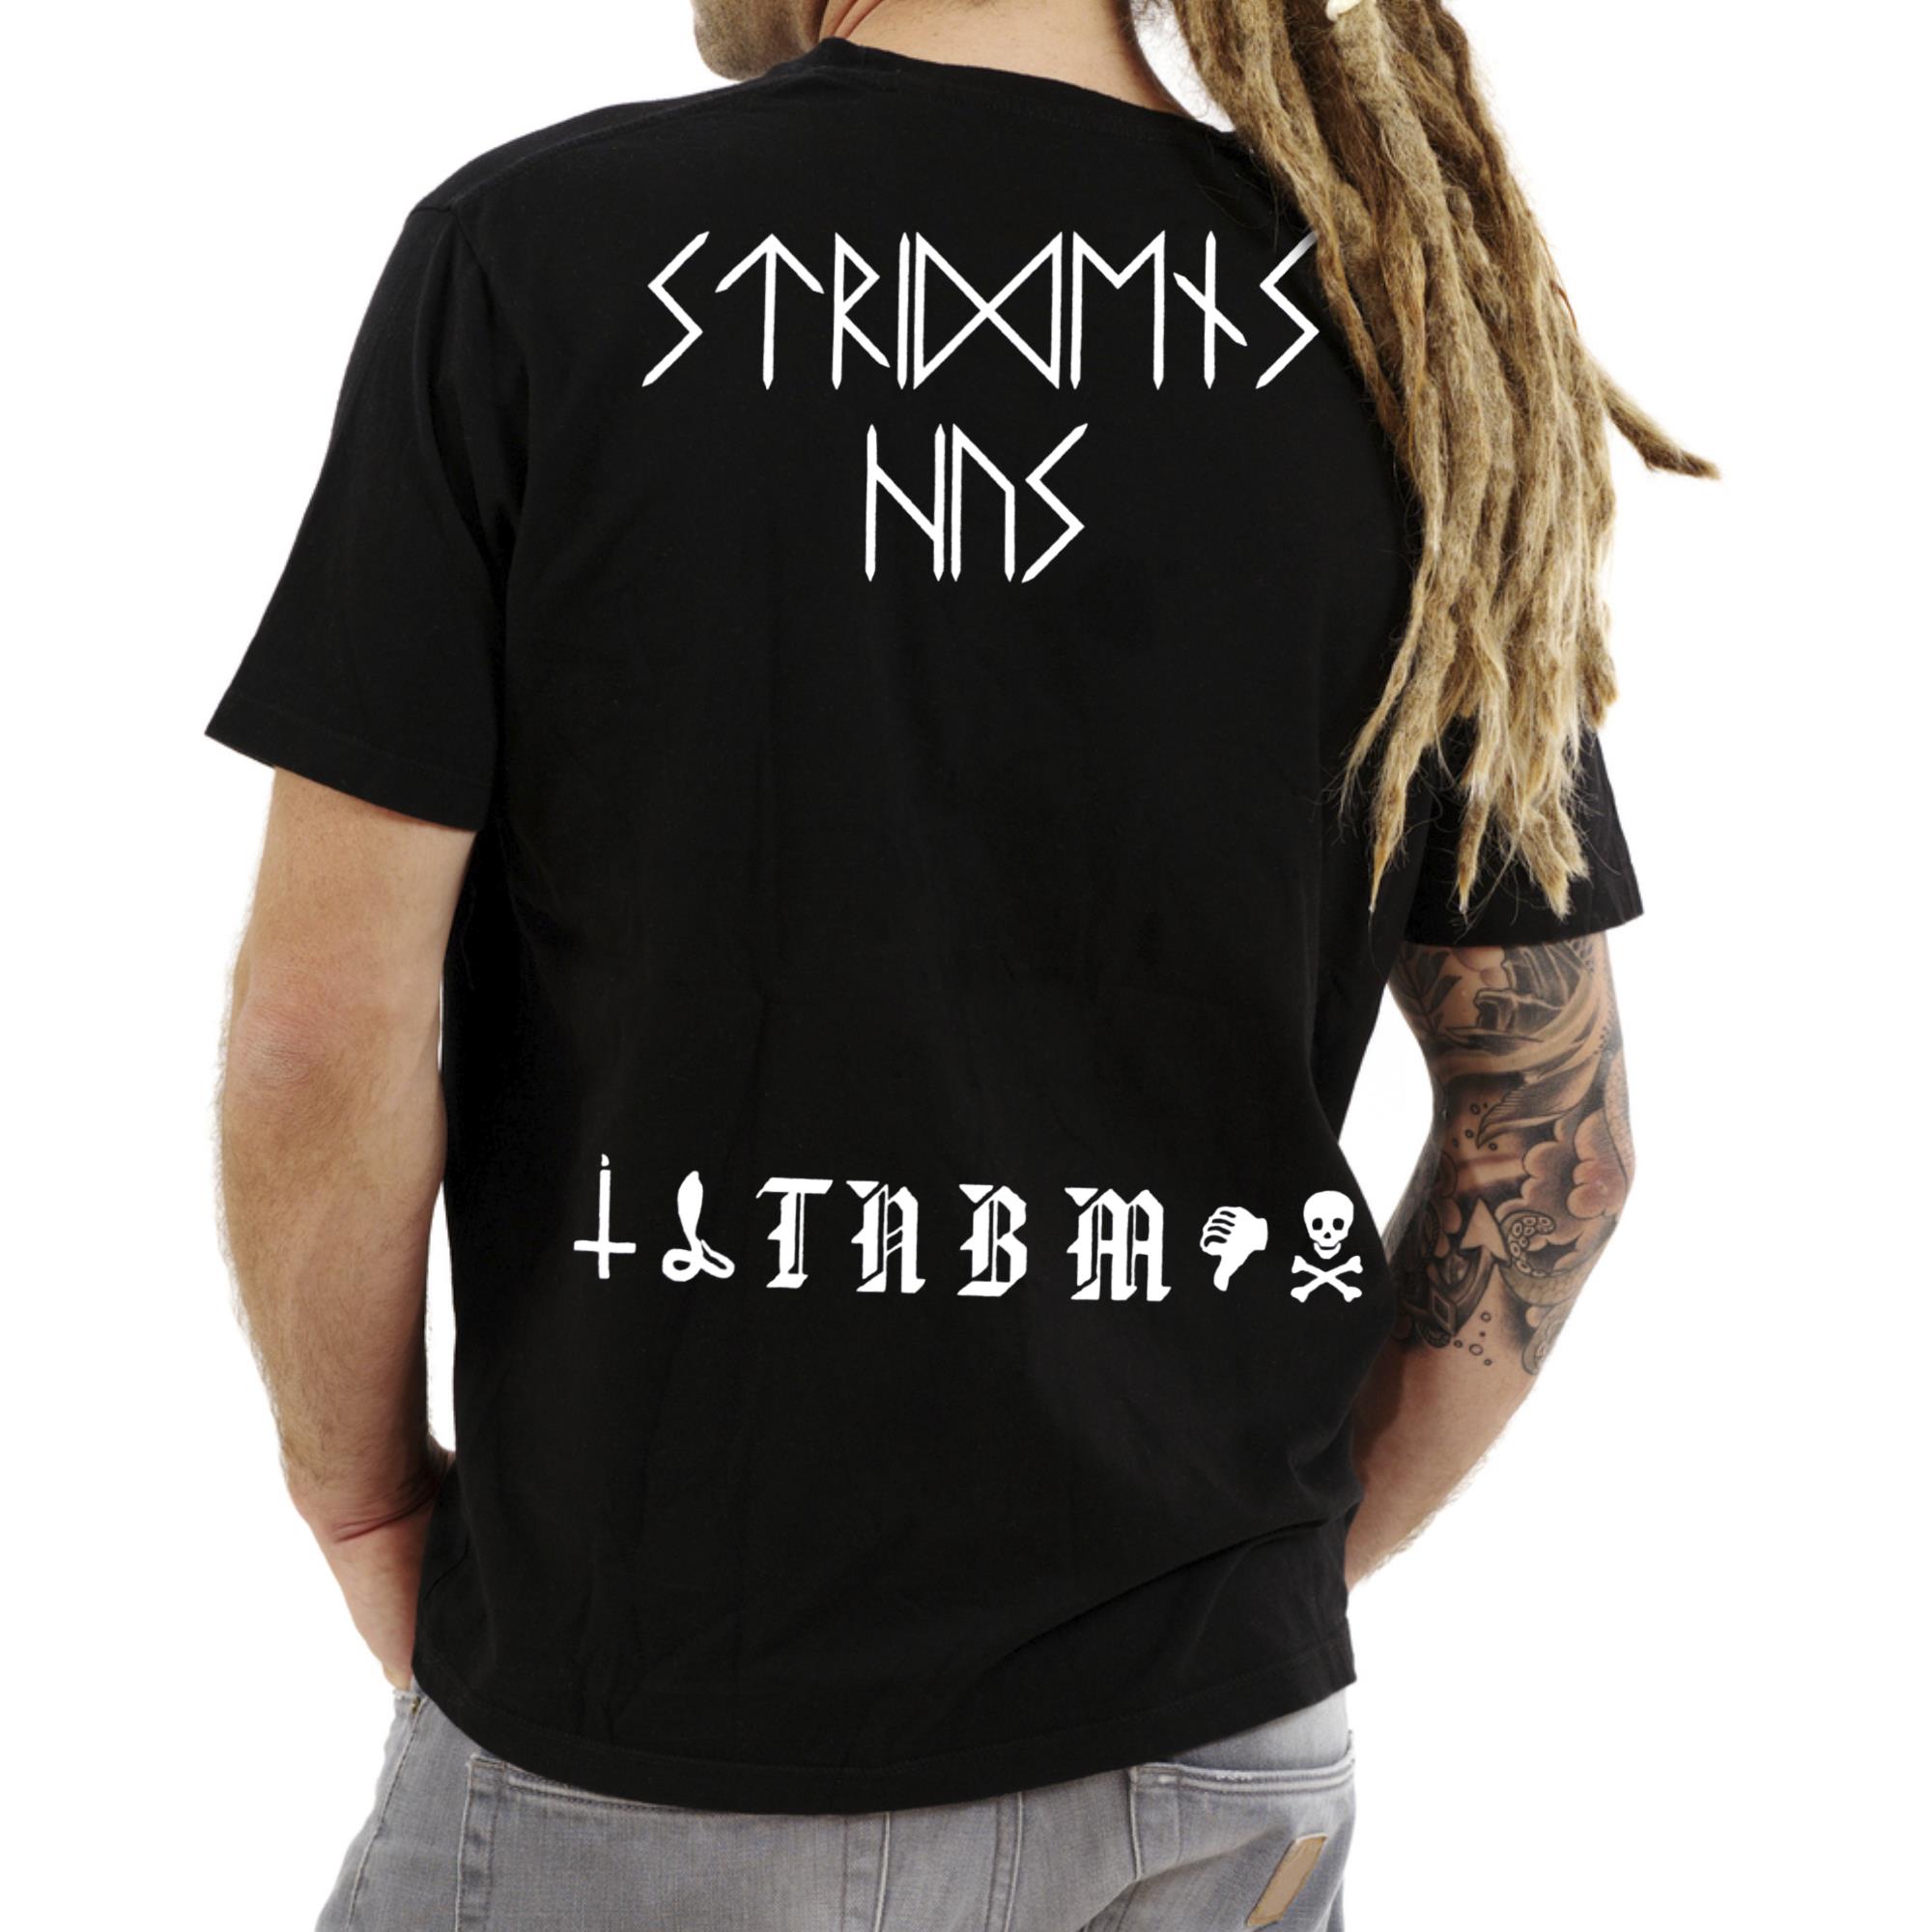 Striden Hus (Import) T-Shirt